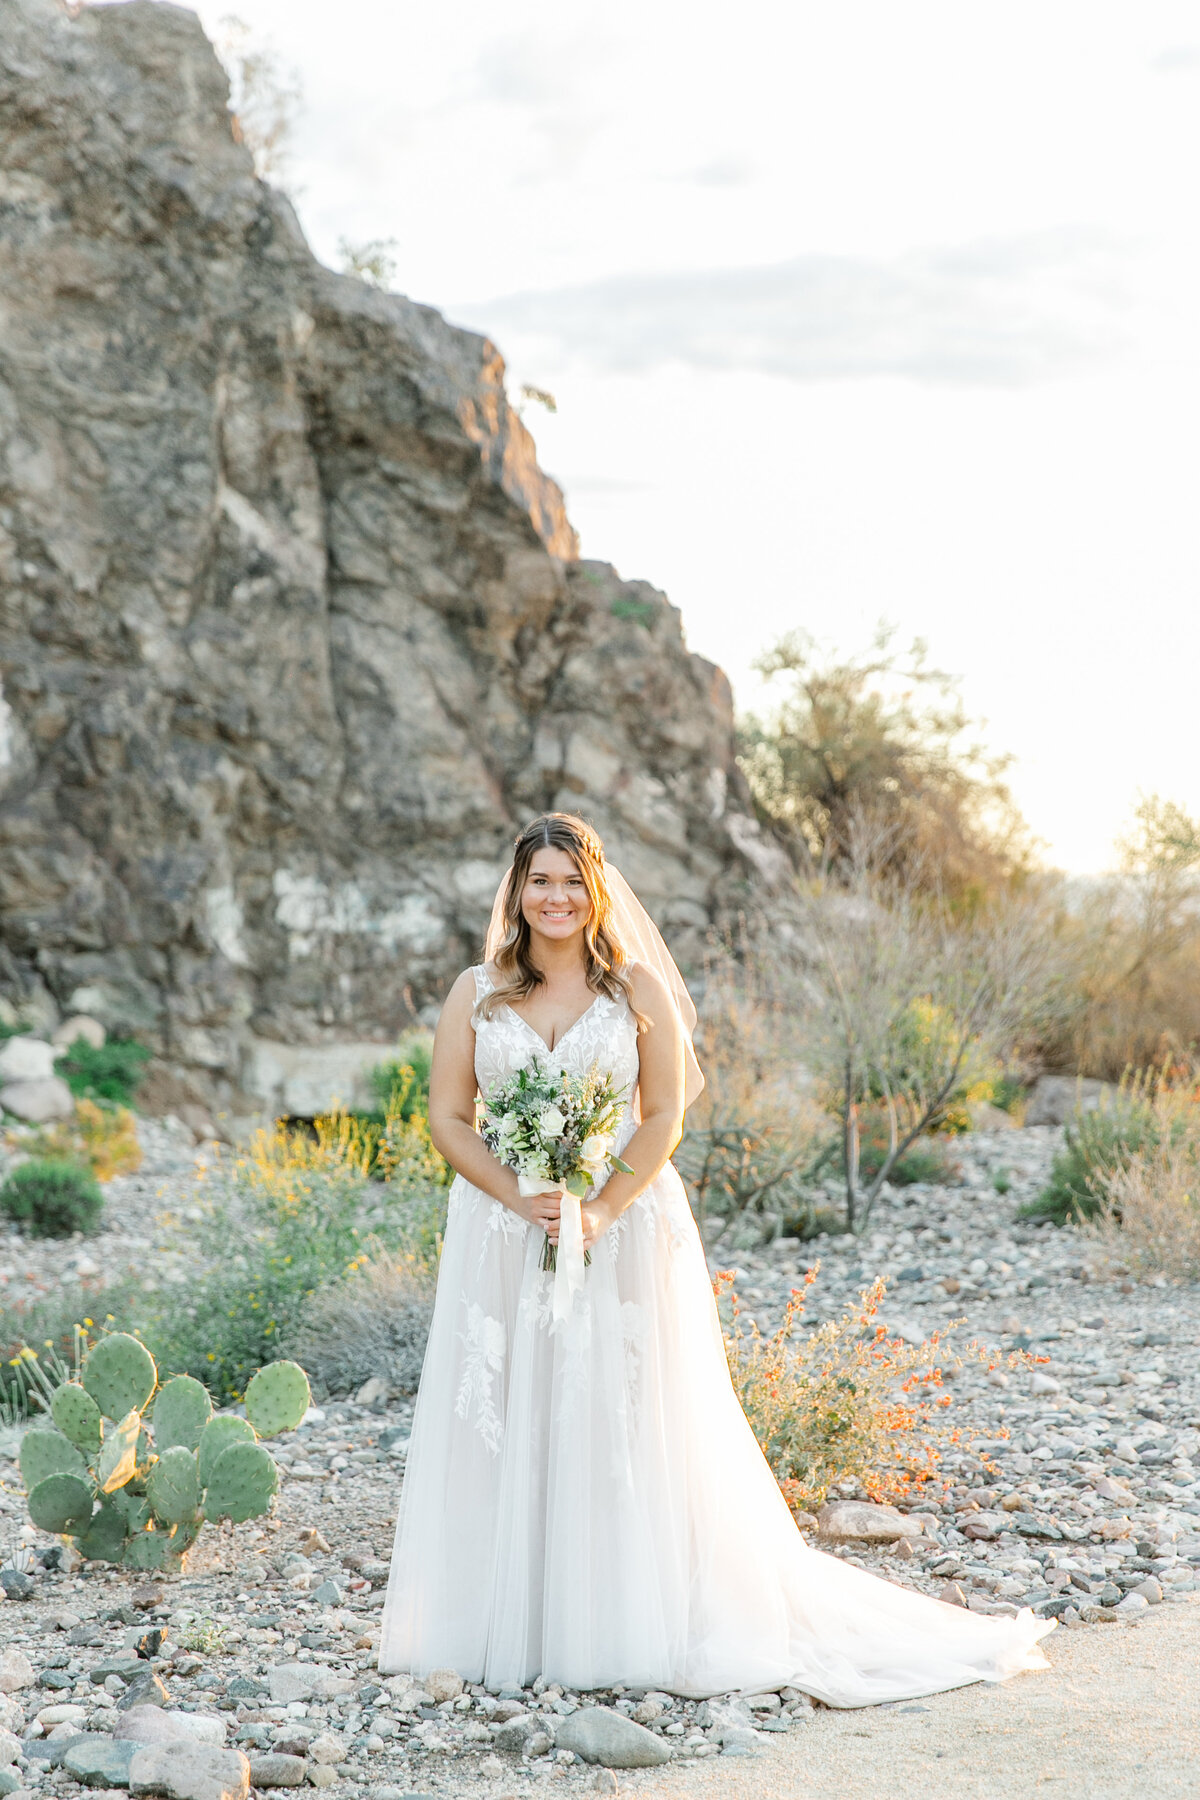 Karlie Colleen Photography - Arizona Backyard wedding - Brittney & Josh-225